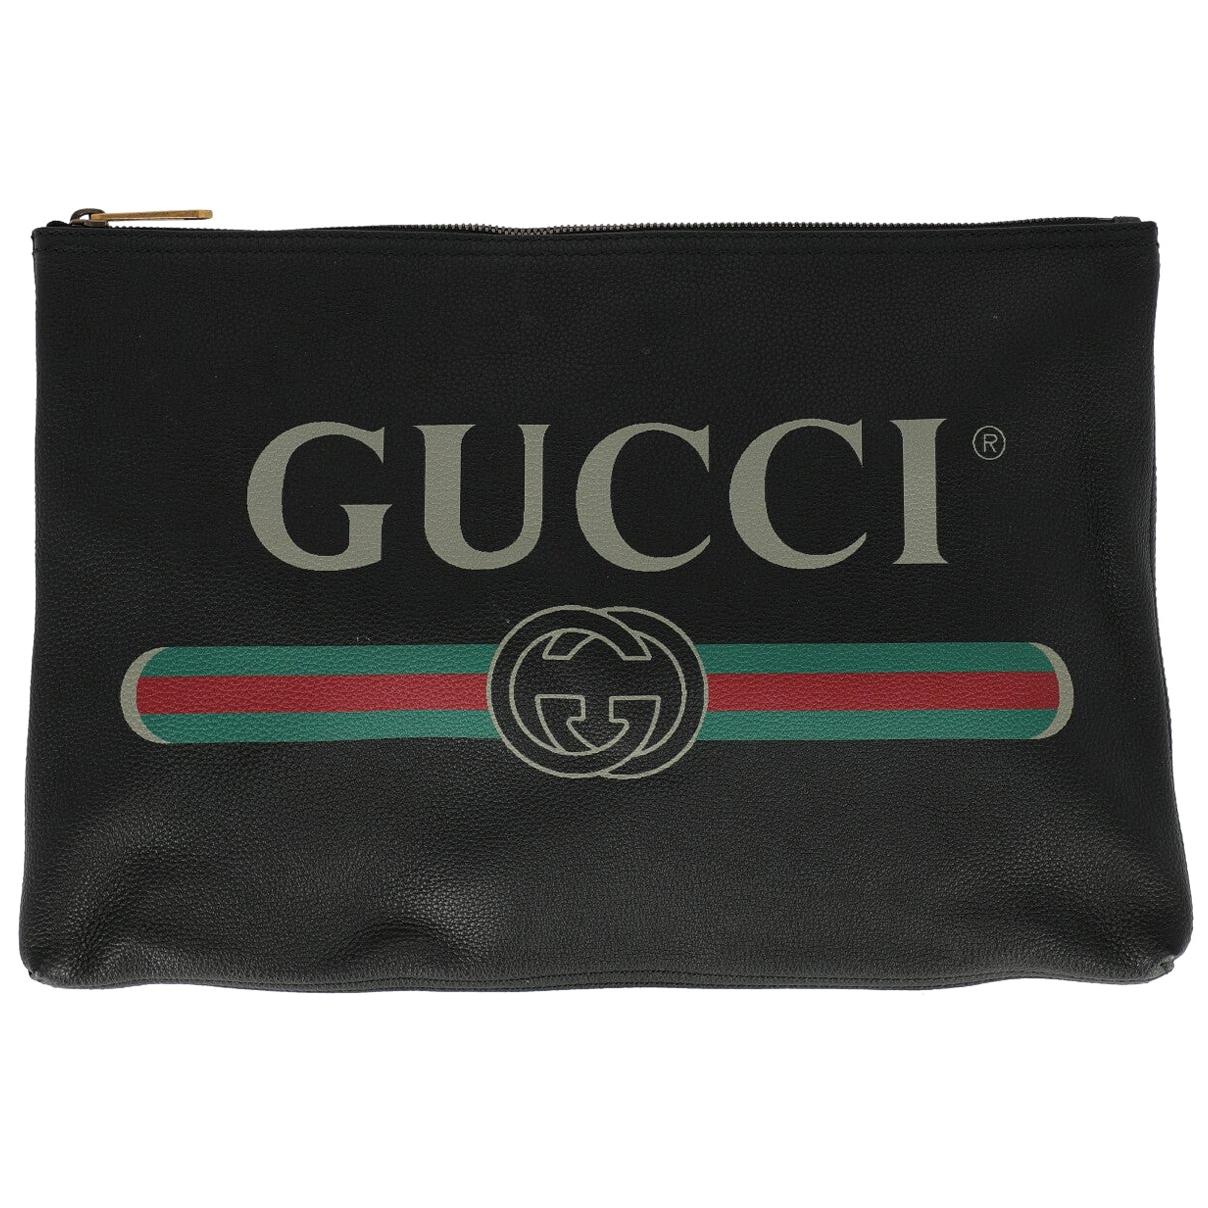 Gucci Woman Handbag  Black Leather For Sale